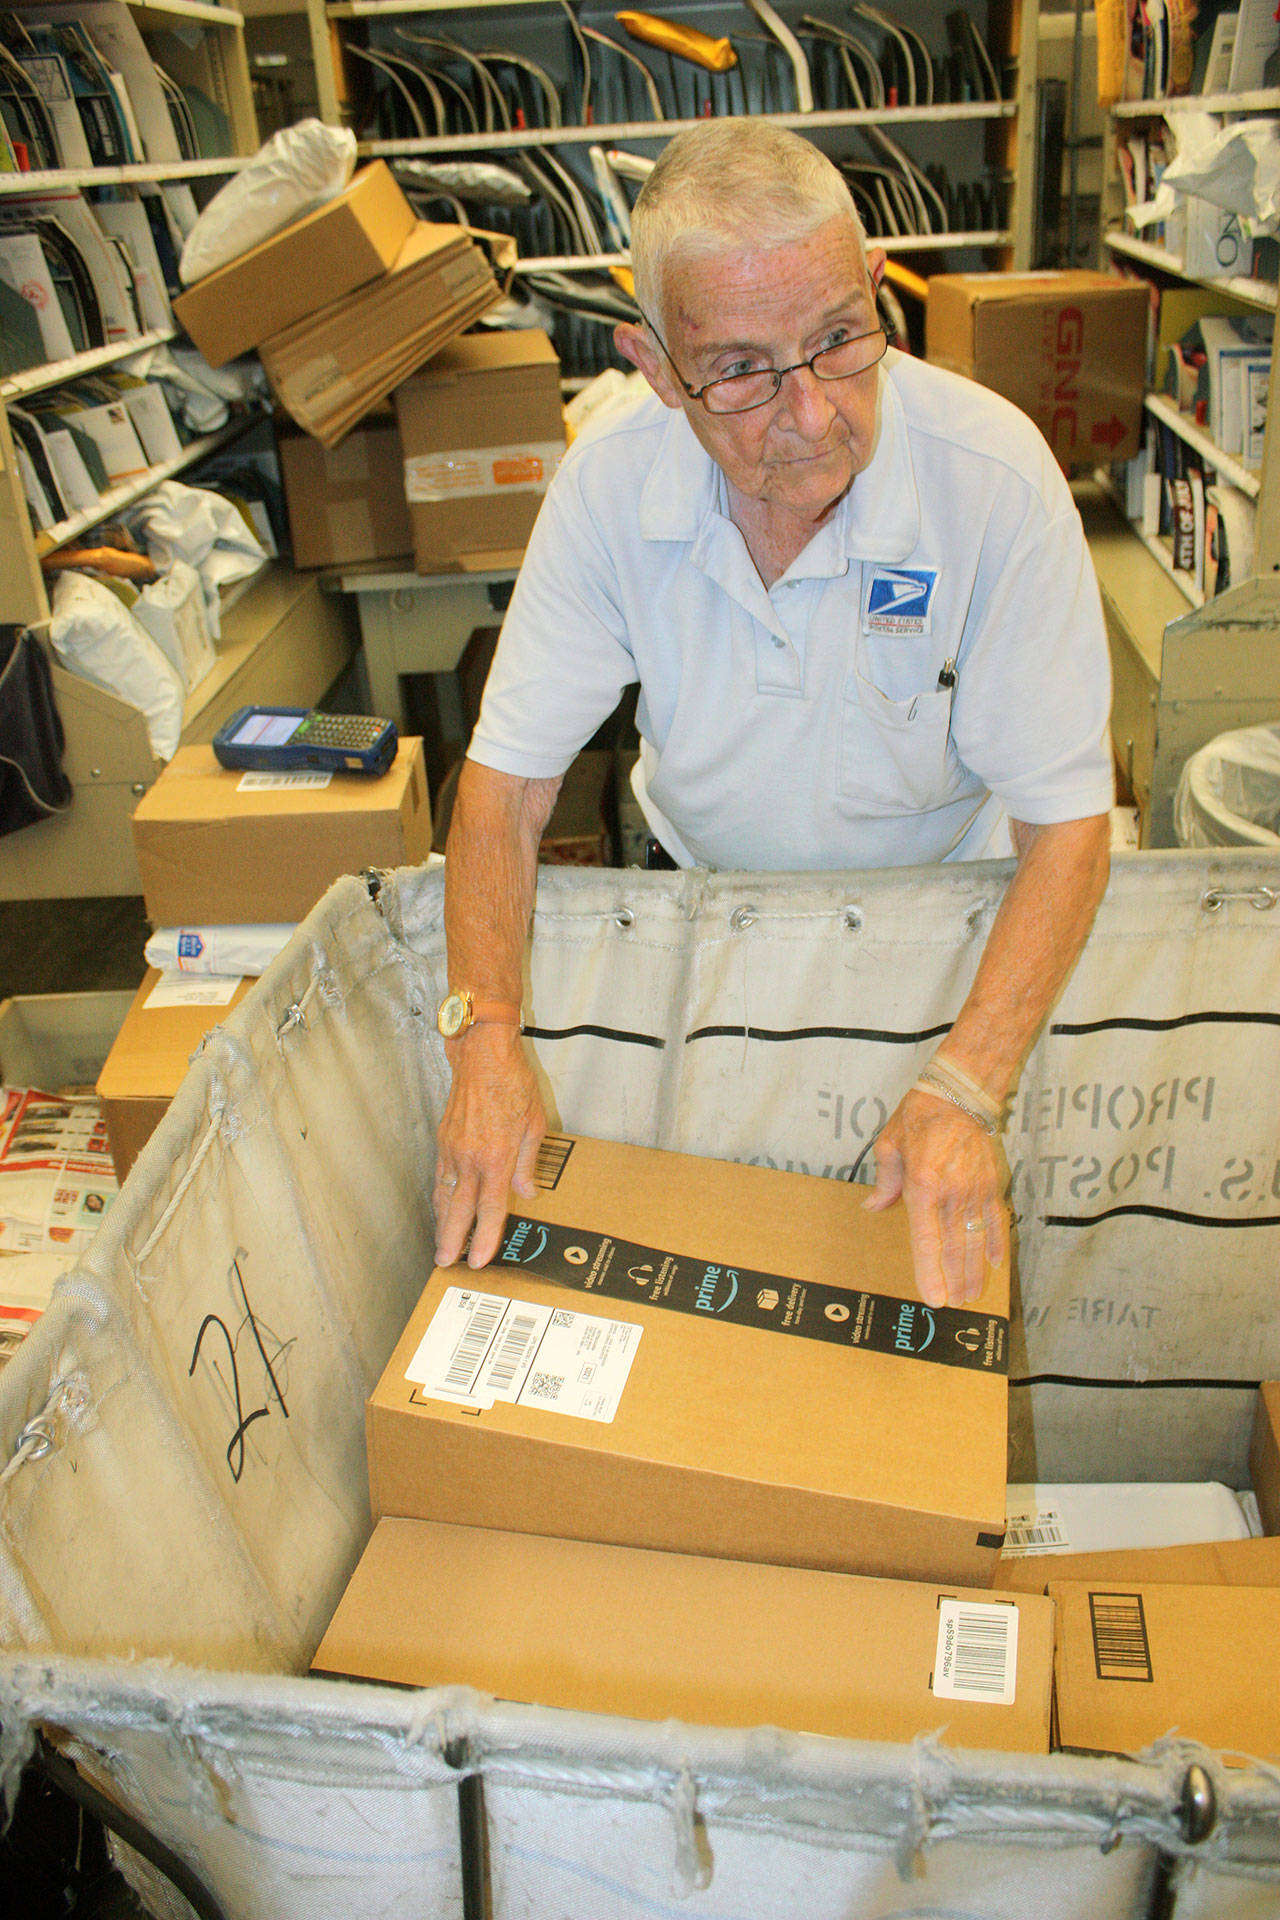 Myrna Ransier arranges packages for delivery at her workstation at the Auburn Post Office. MARK KLAAS, AUBURN REPORTER